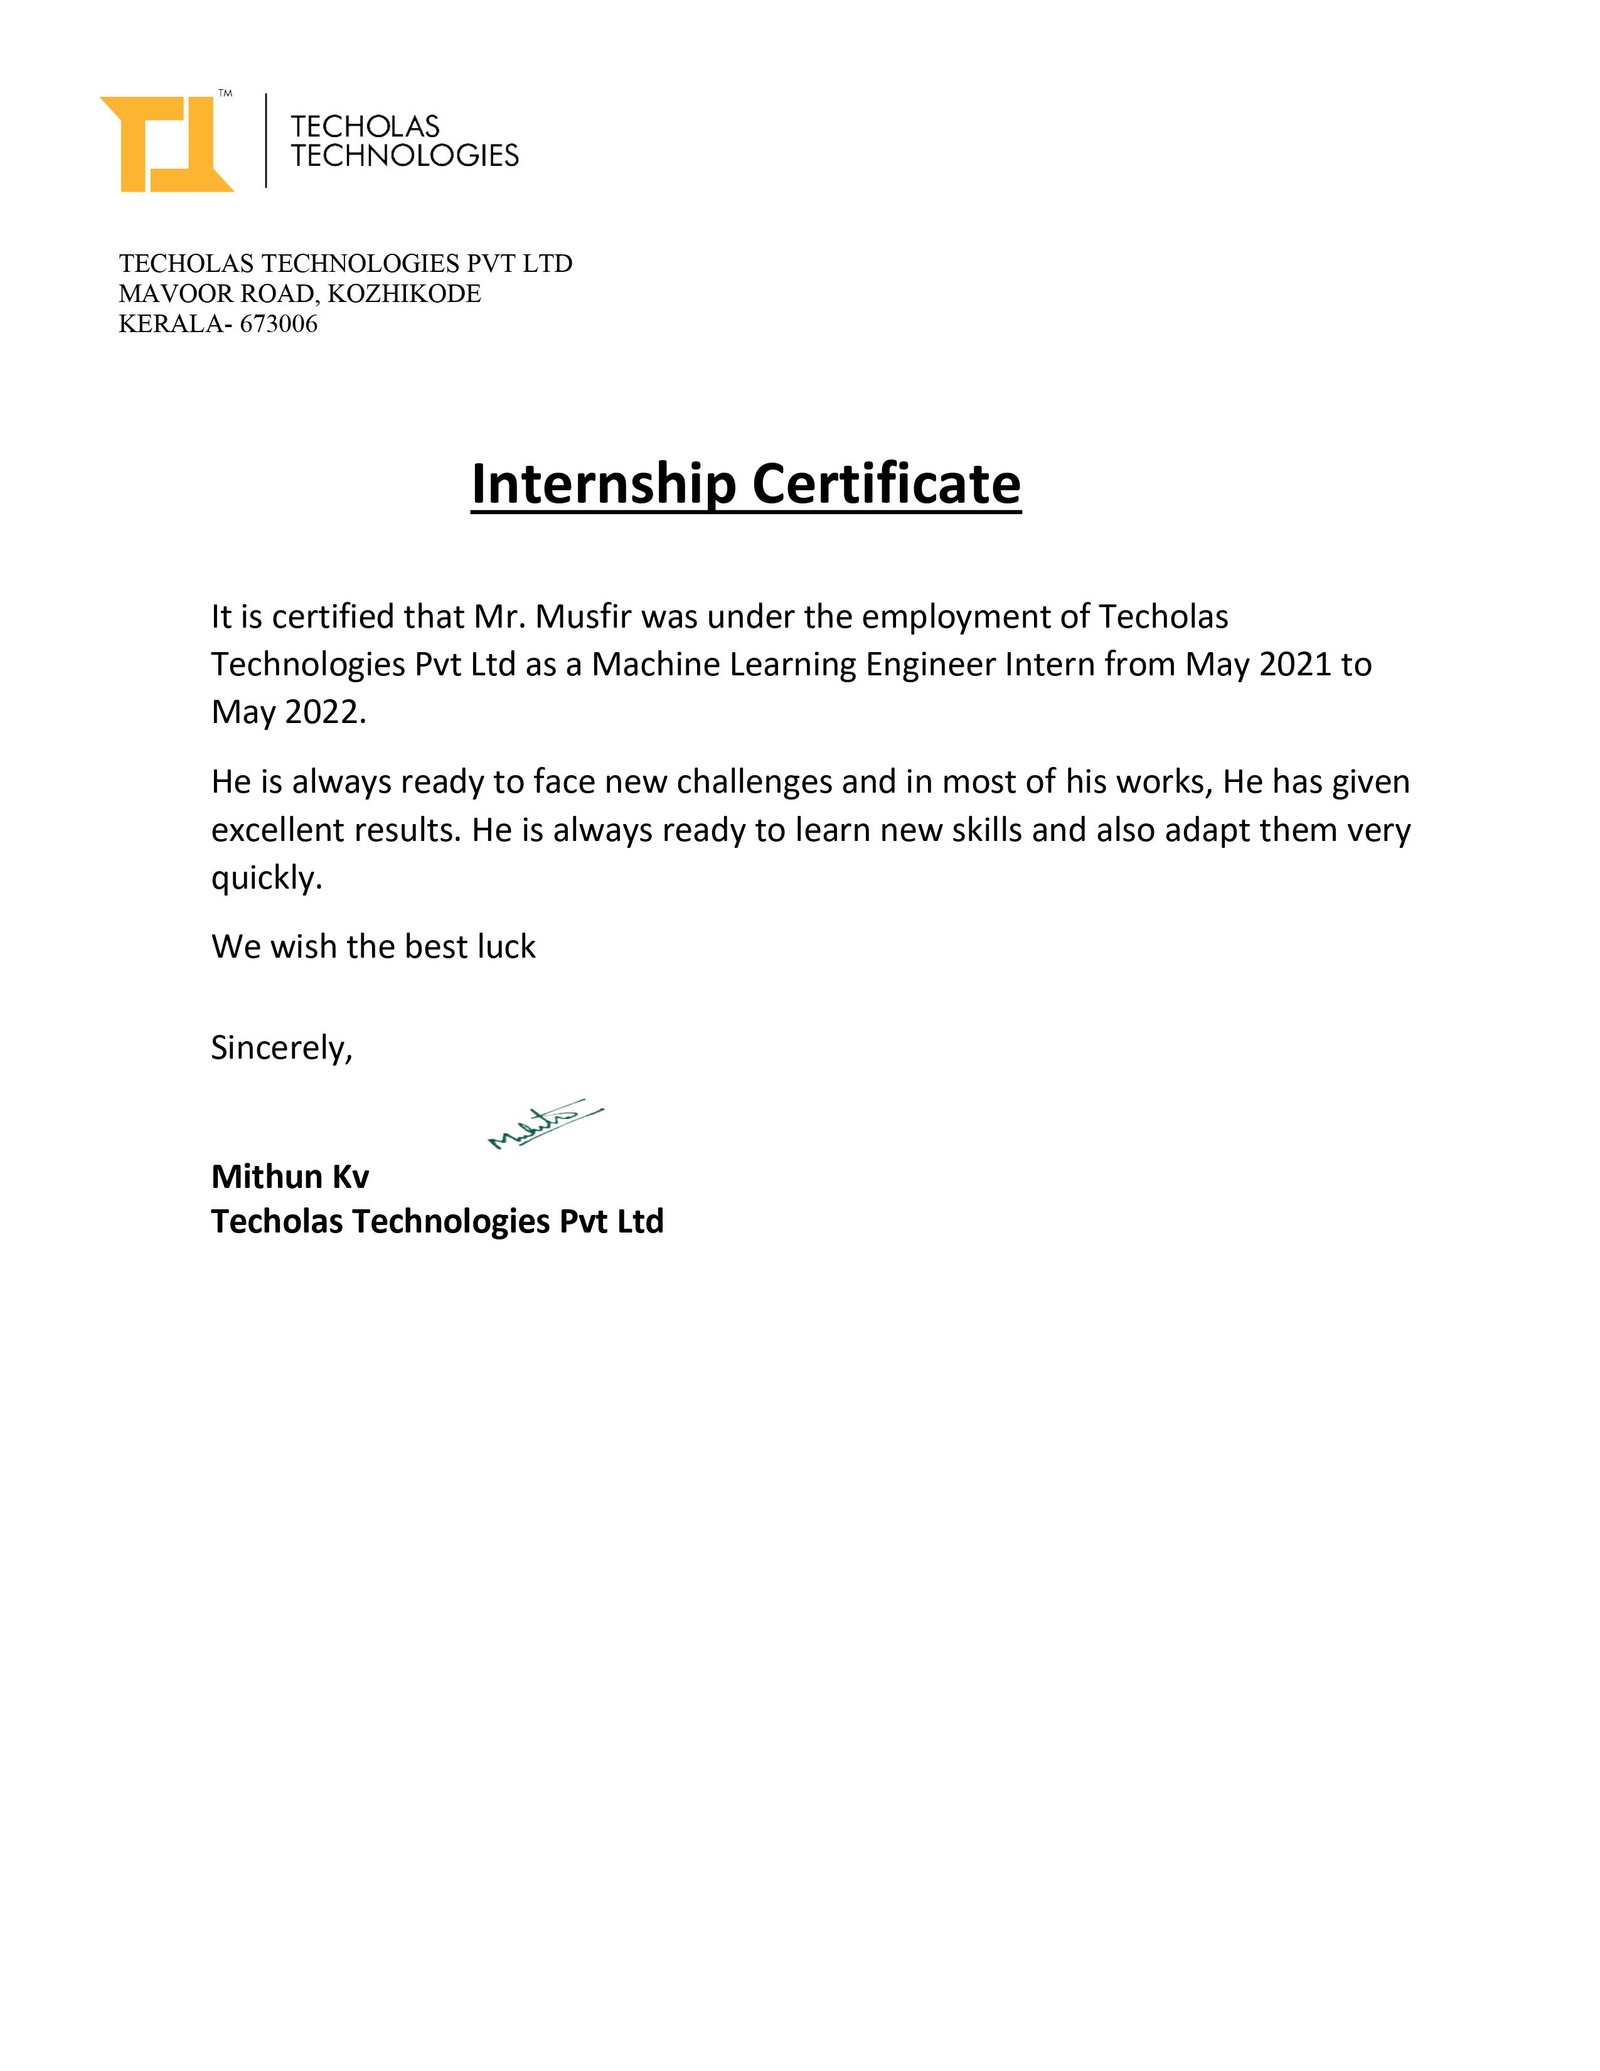 Digital Marketing Internship Certificate in Kerala